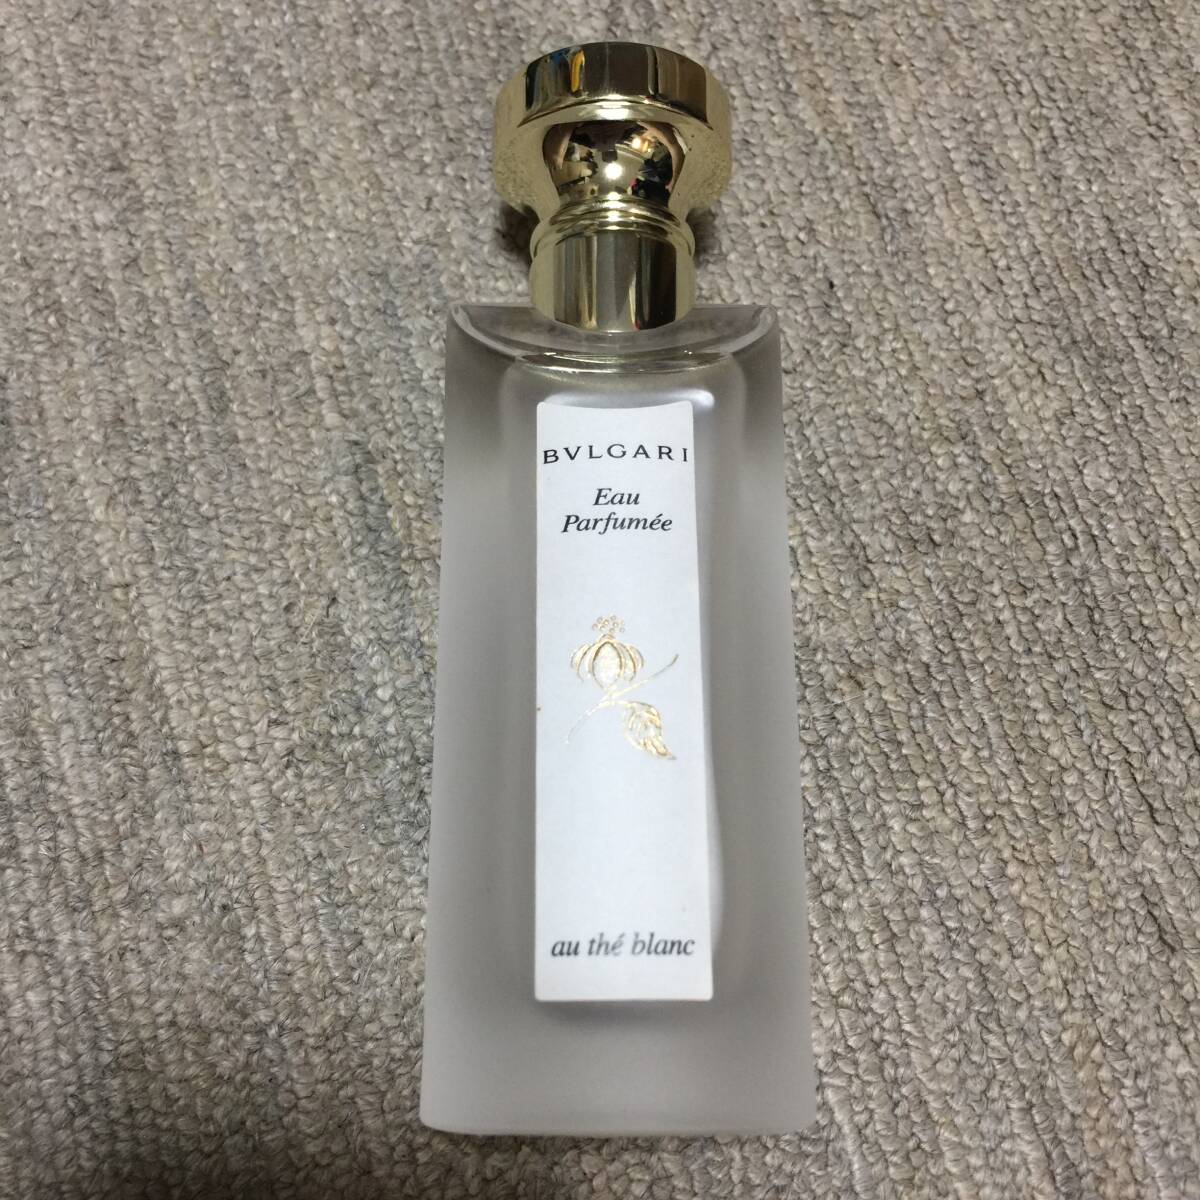 BVLGARI EDC 75ml Eau Parfumee au the blanc 約9割 _画像1